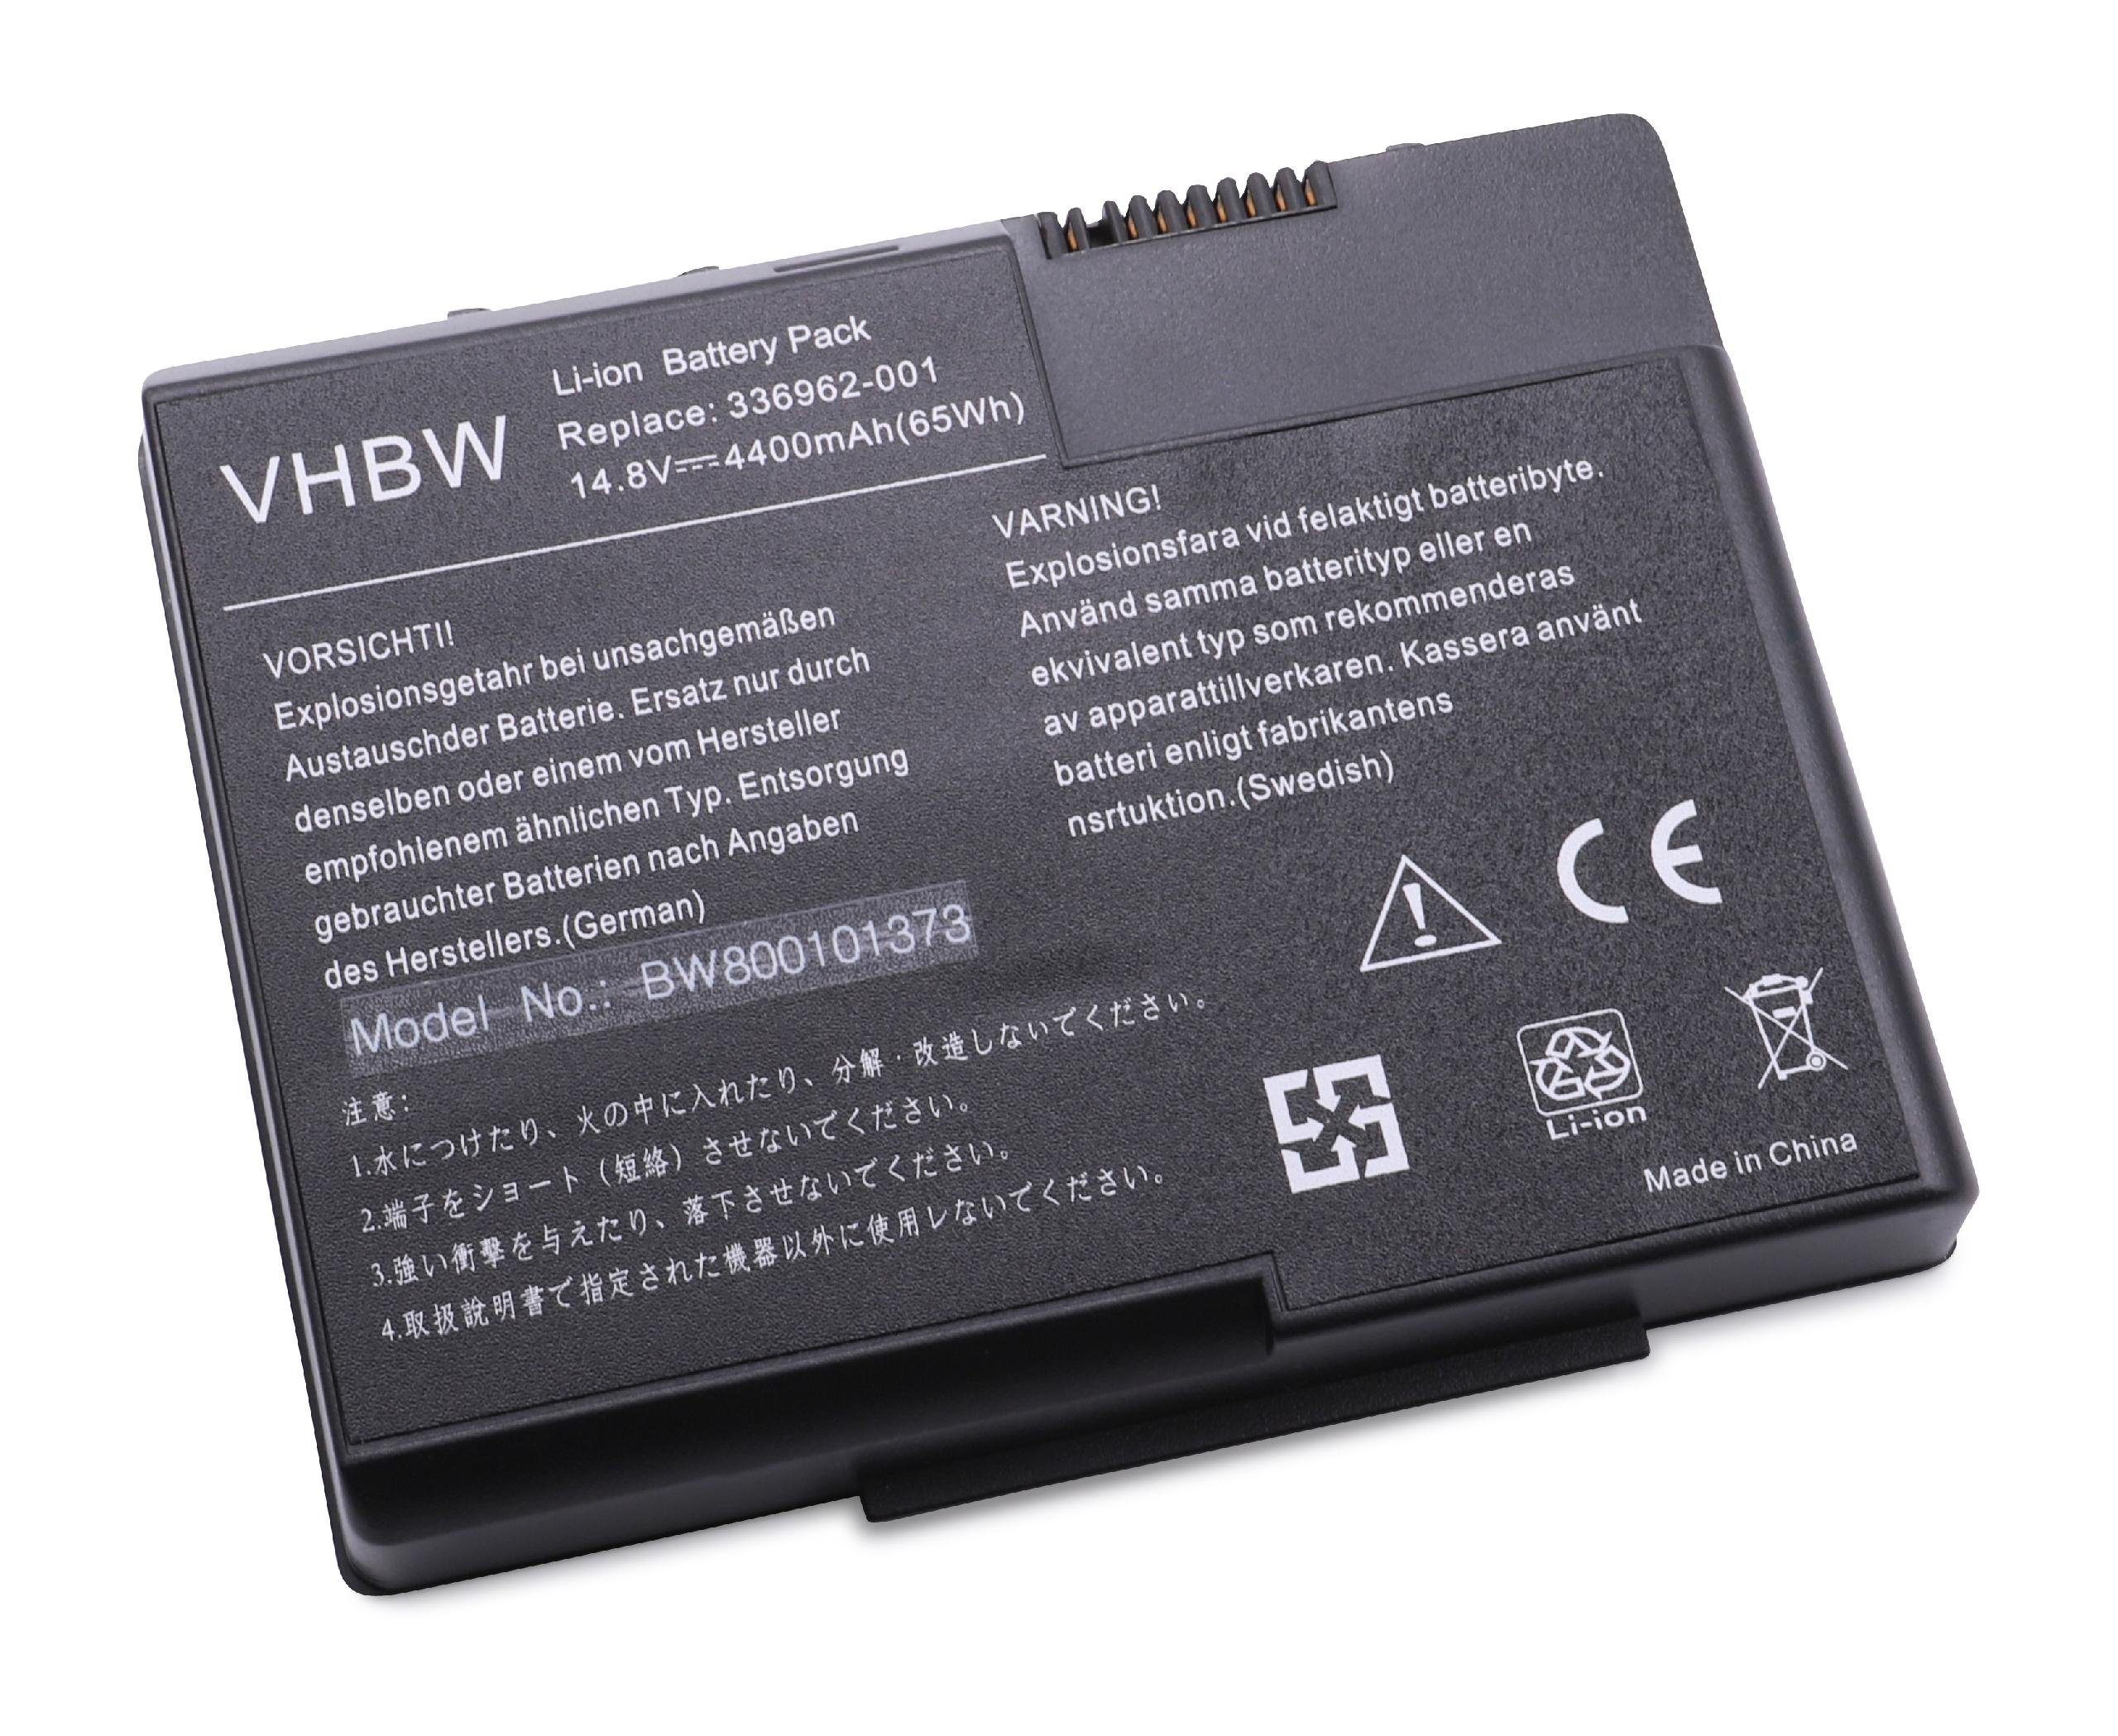 vhbw passend X1015US, X1015US Compaq für Presario mAh (DN585AR), 4400 Laptop-Akku HP X1012QV